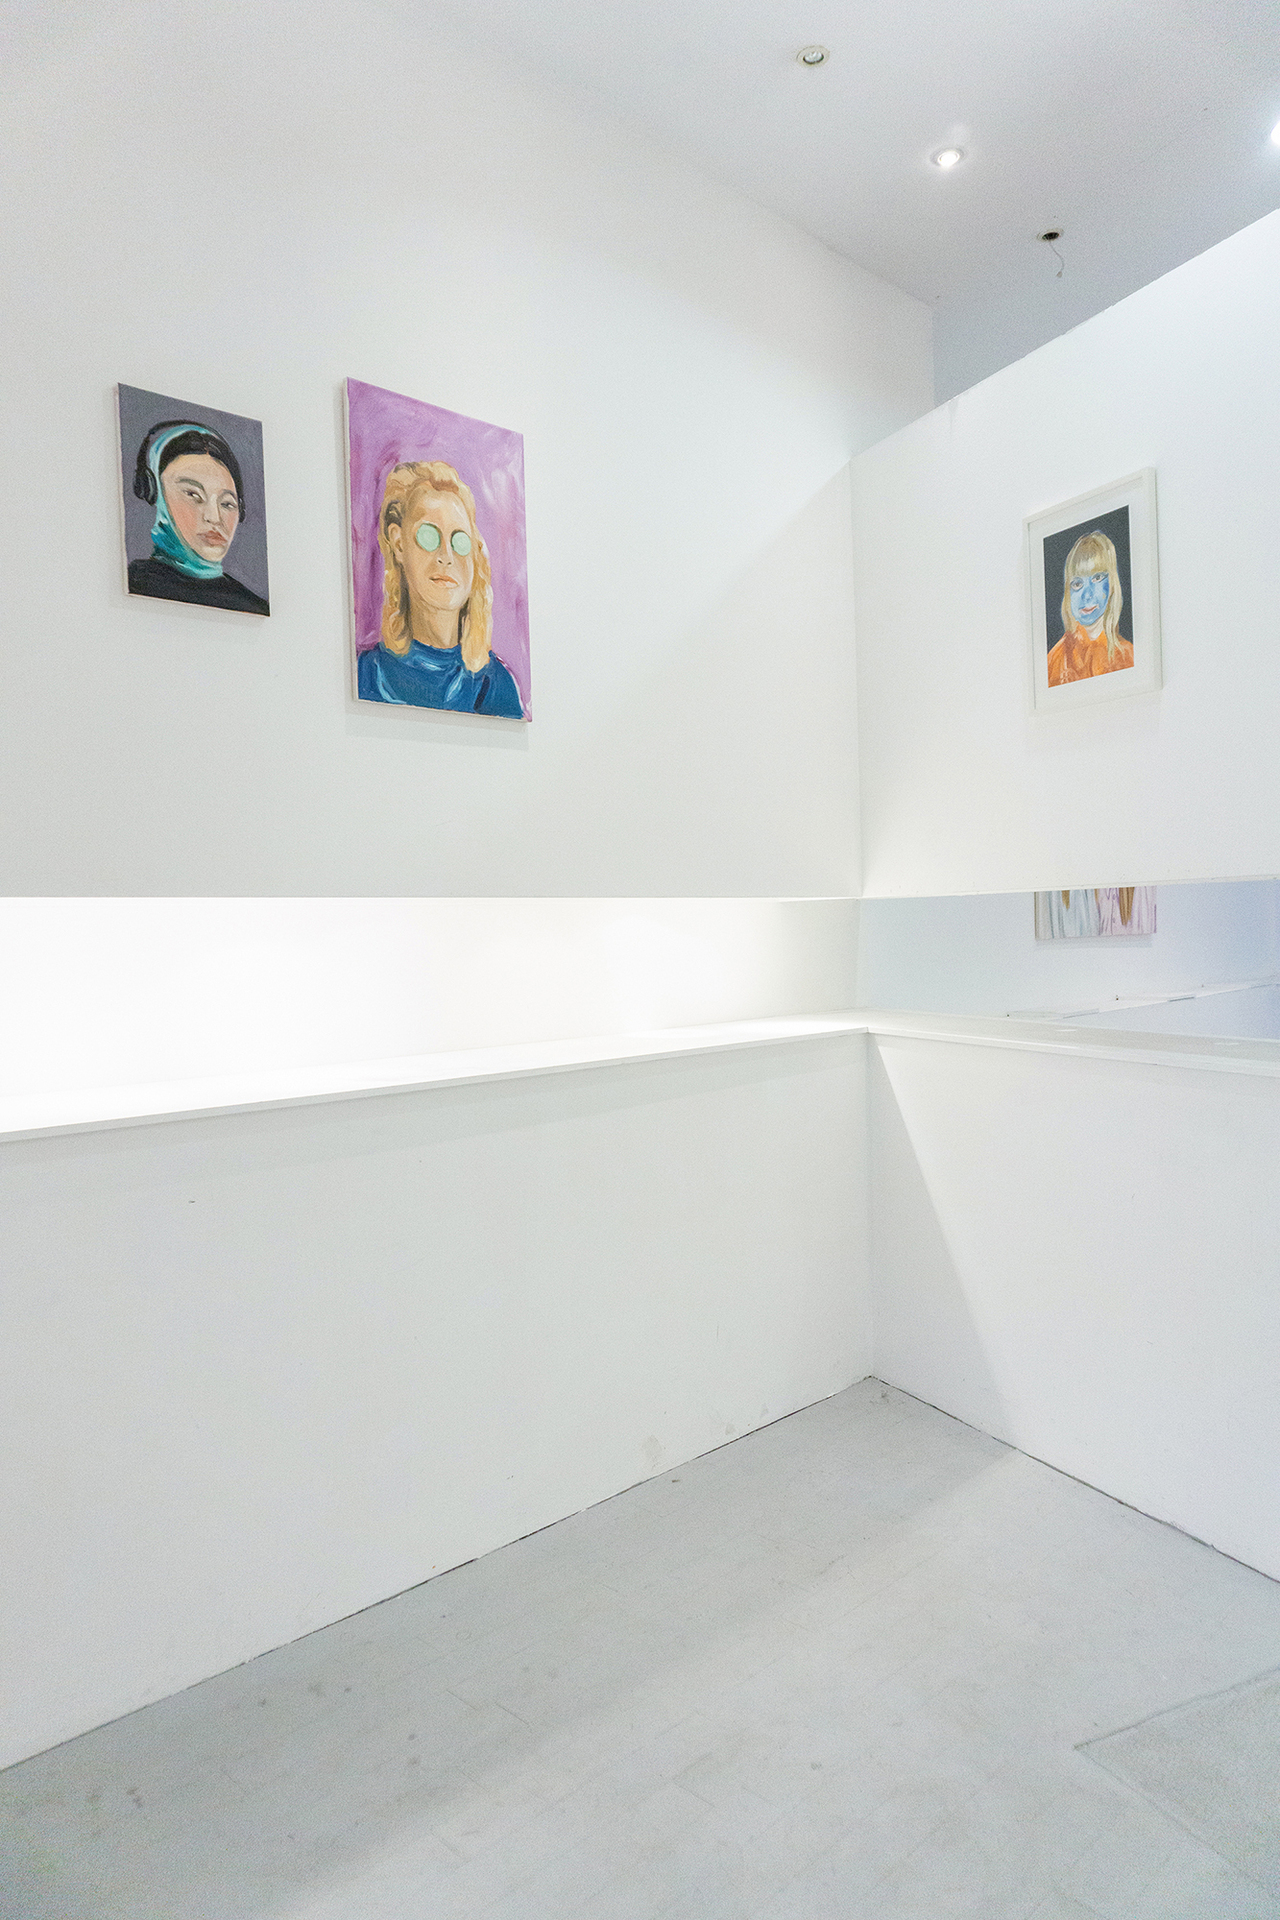 Left: Yoon, 2021, oil on linen, 30 x 40 cm Middle: Ich brauche nichts zu sehen,, 2021, oil on linen, 50 x 70 cm Right: Kinderschminke III, 2021, oil on paper, 30 x 40 cm, framed